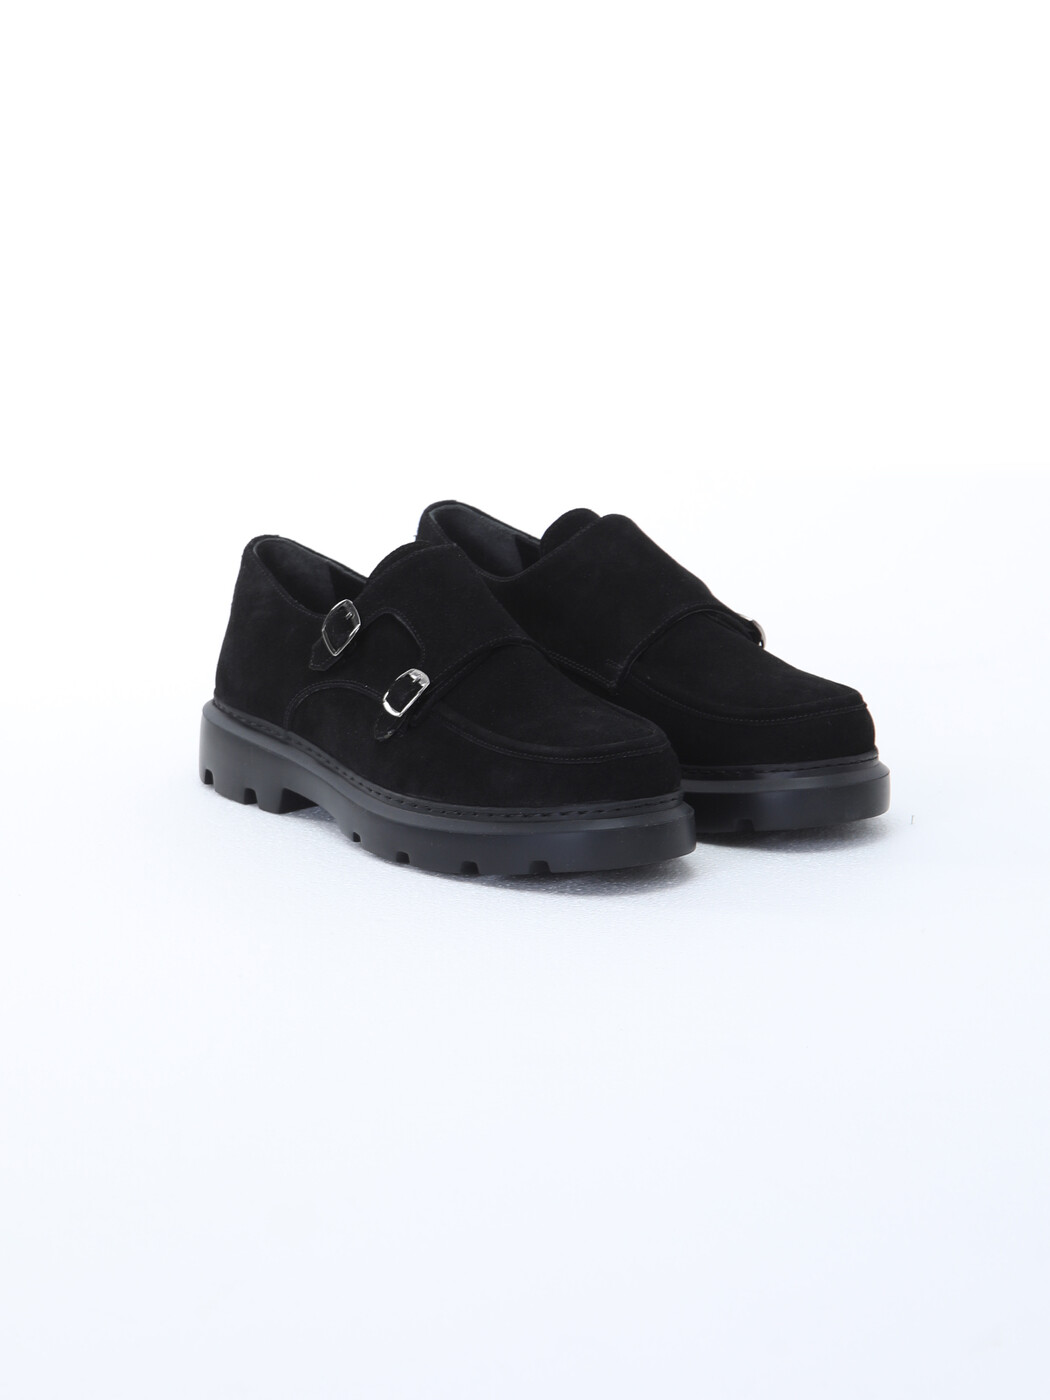 KİP - Siyah Ayakkabı (1)